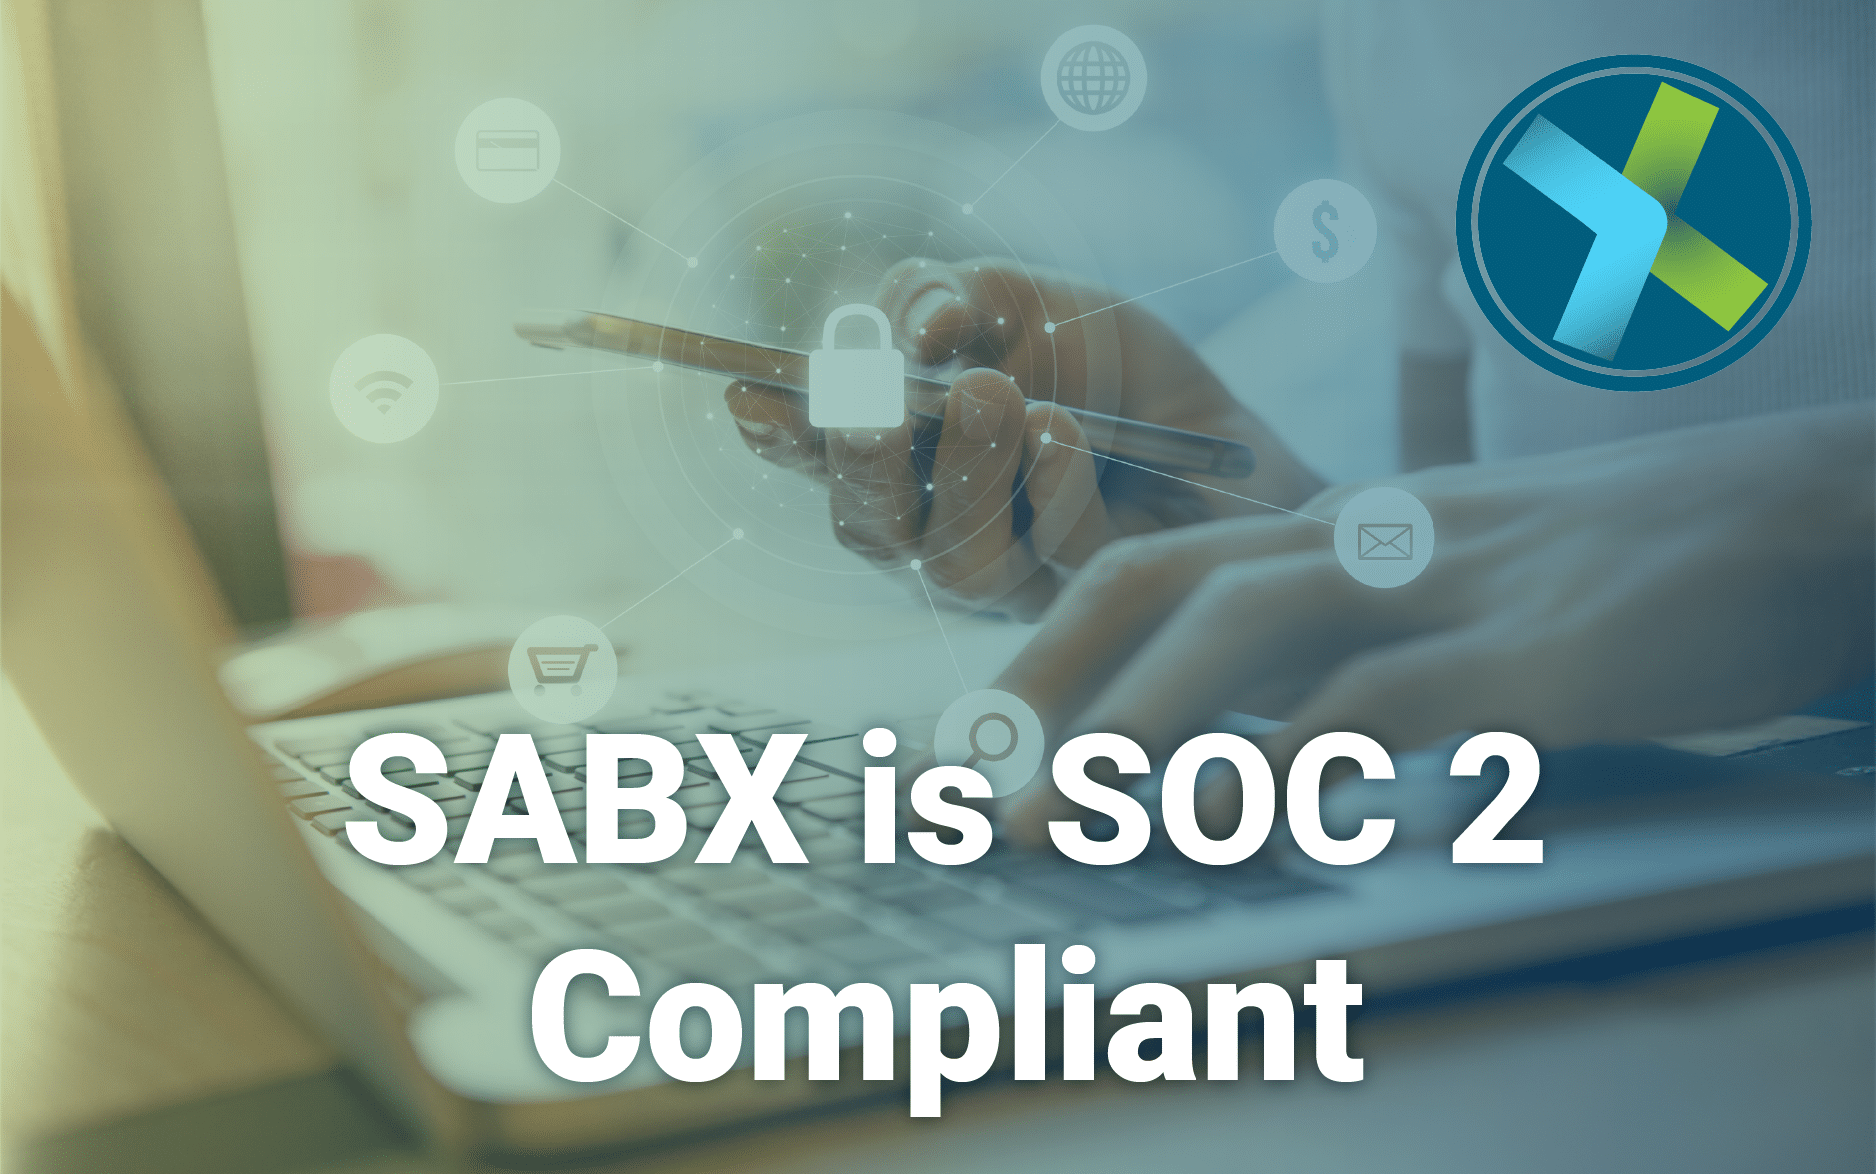 SABX is SOC 2 Compliant